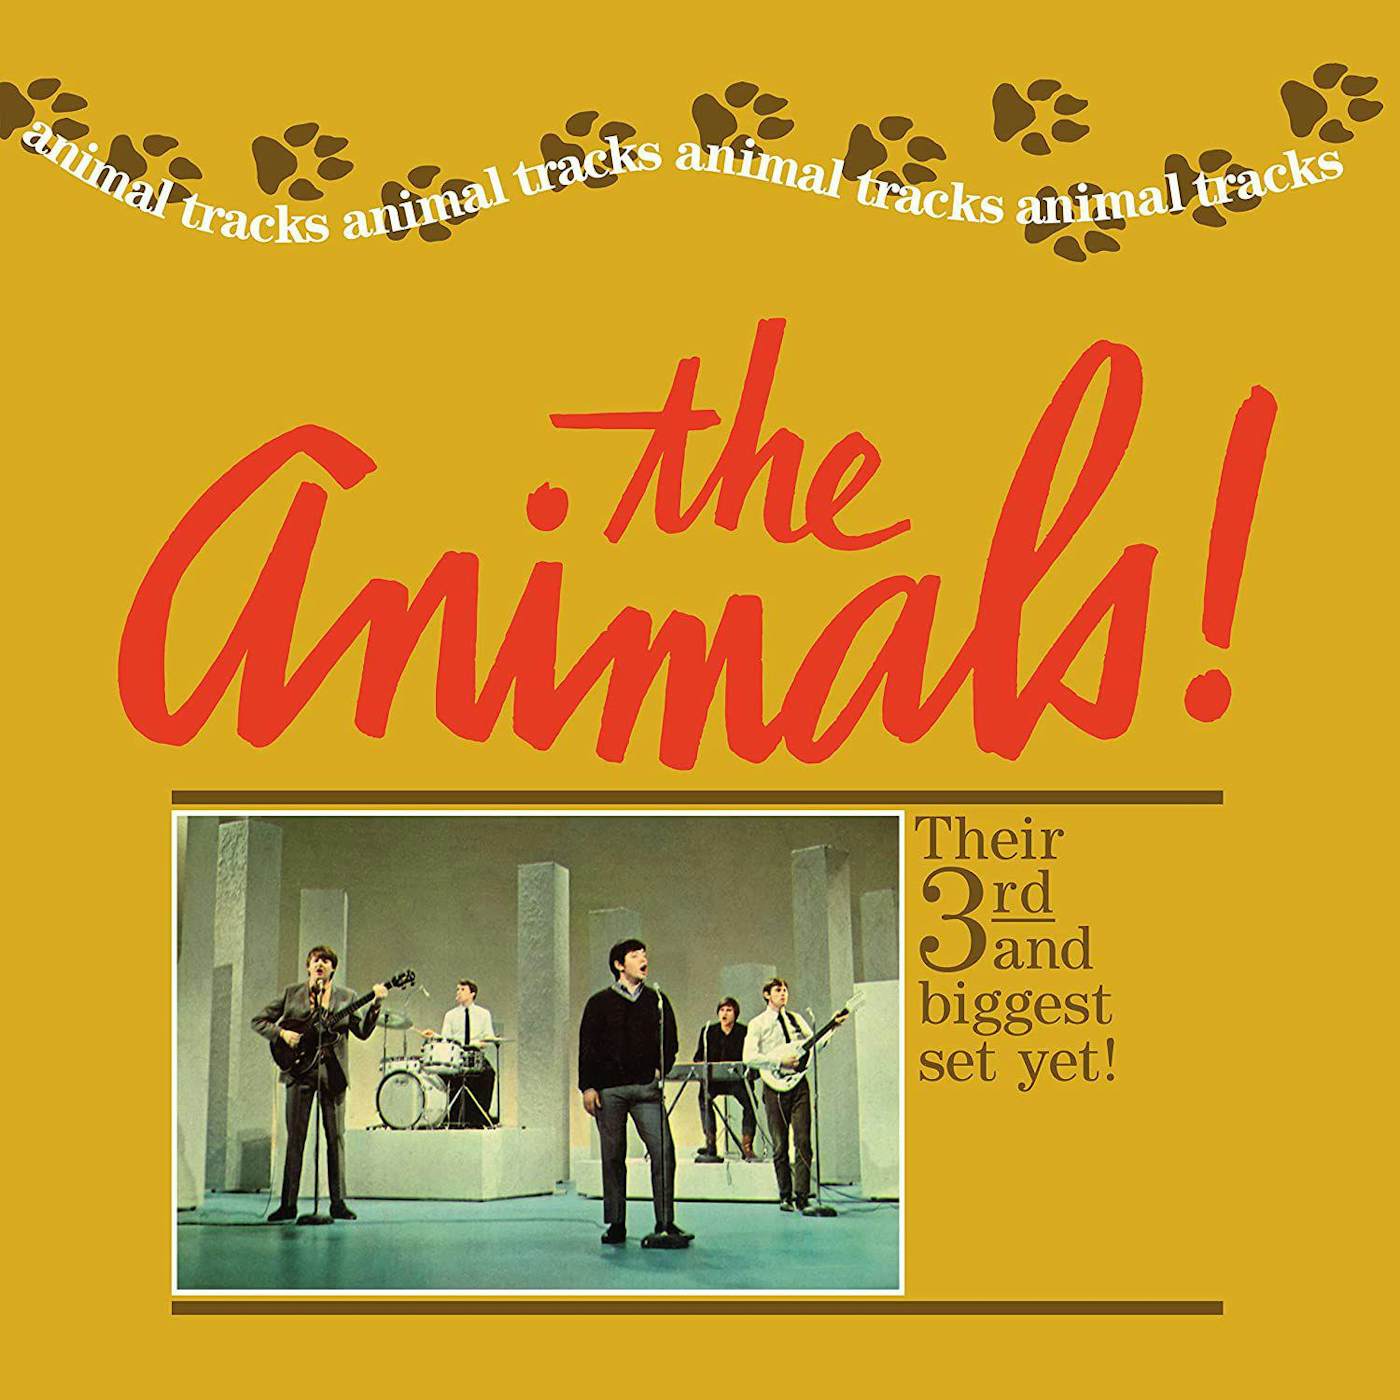 The Animals Animal Tracks Vinyl Record